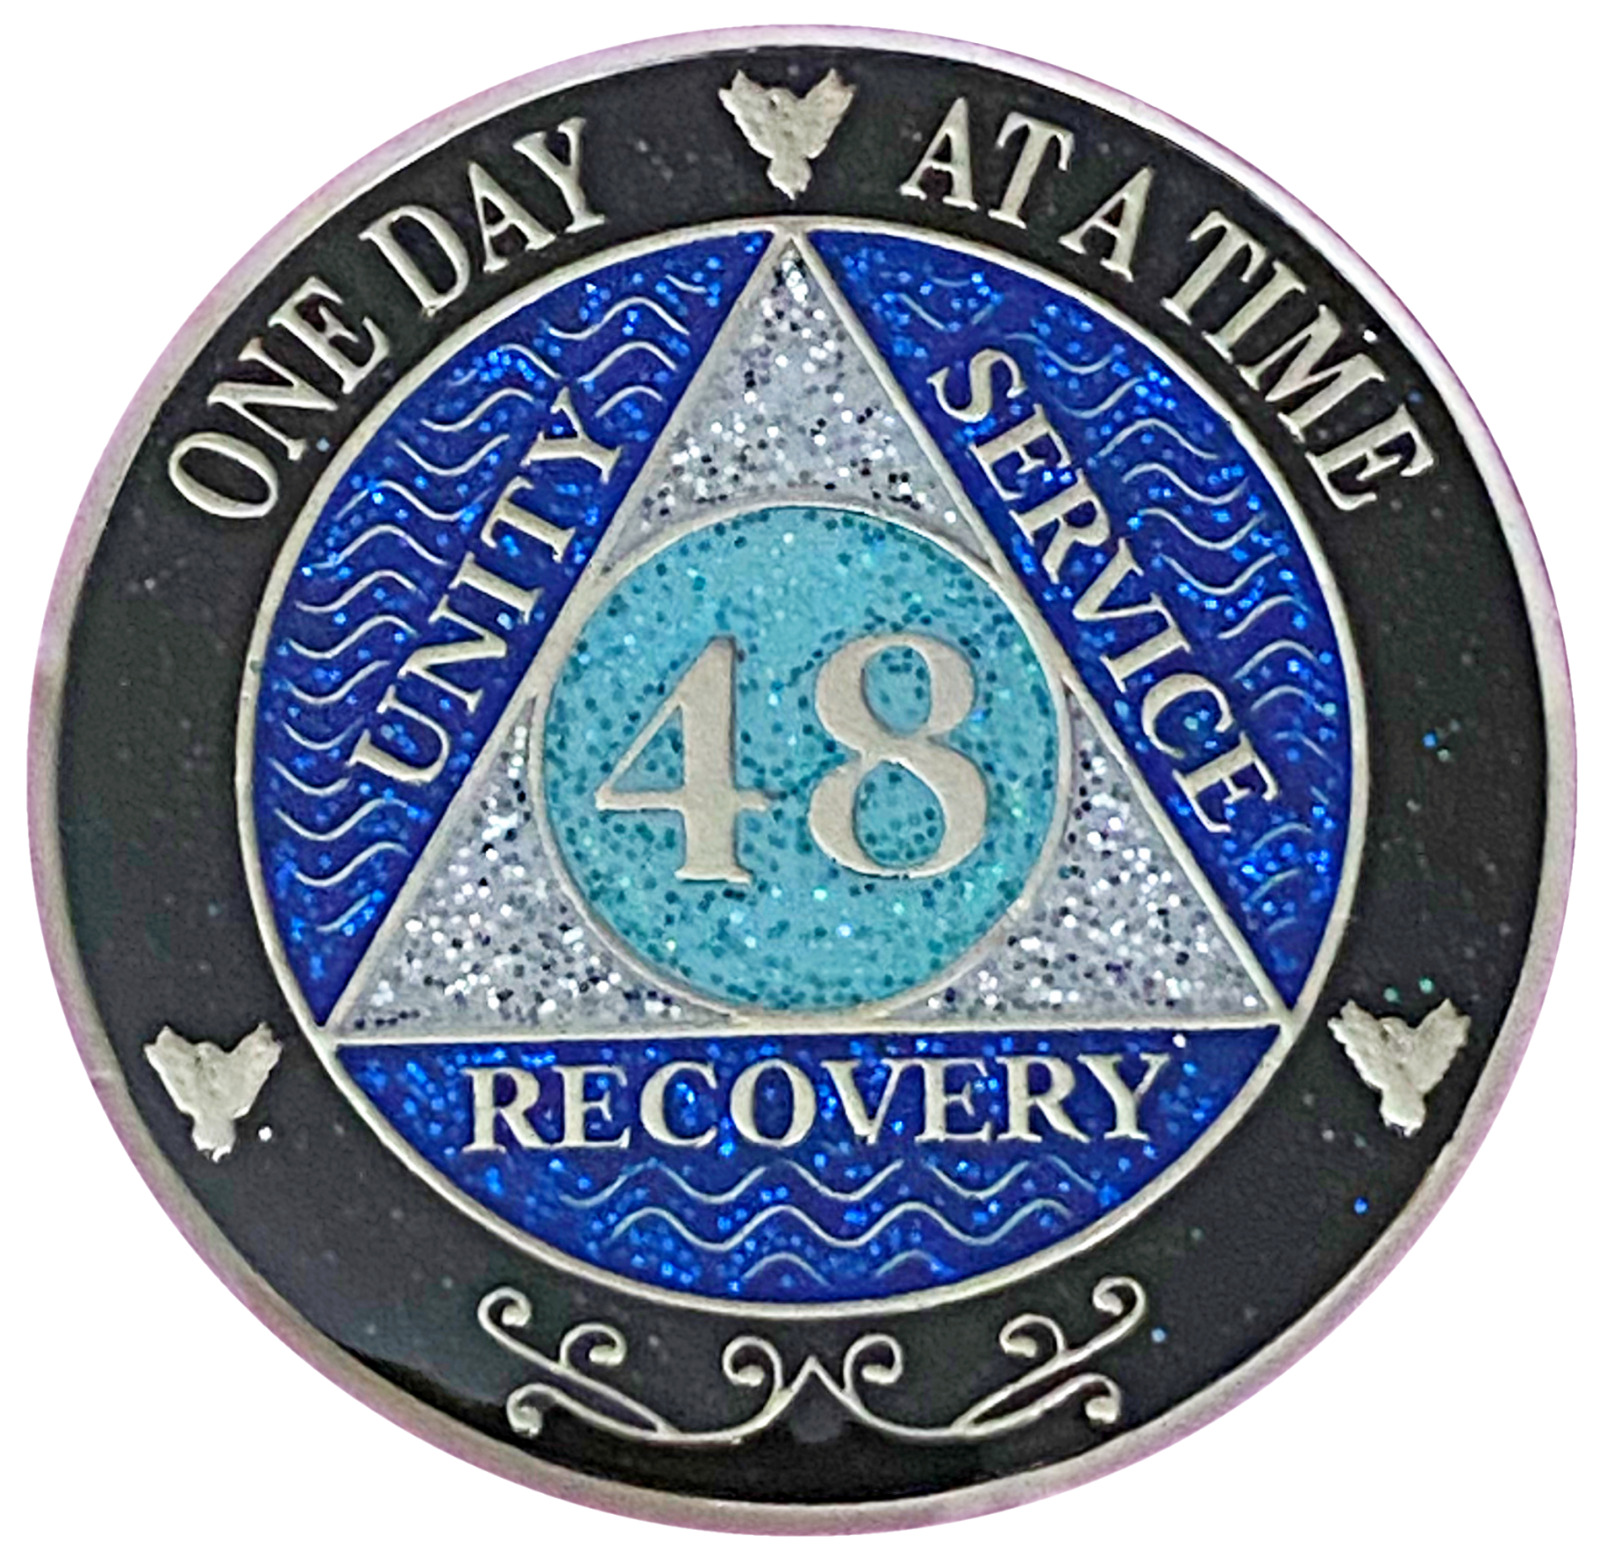 Aa 48 Year Medallion, Black Rainbow, Blue Glitter, Alcoholics Anonymous Coin